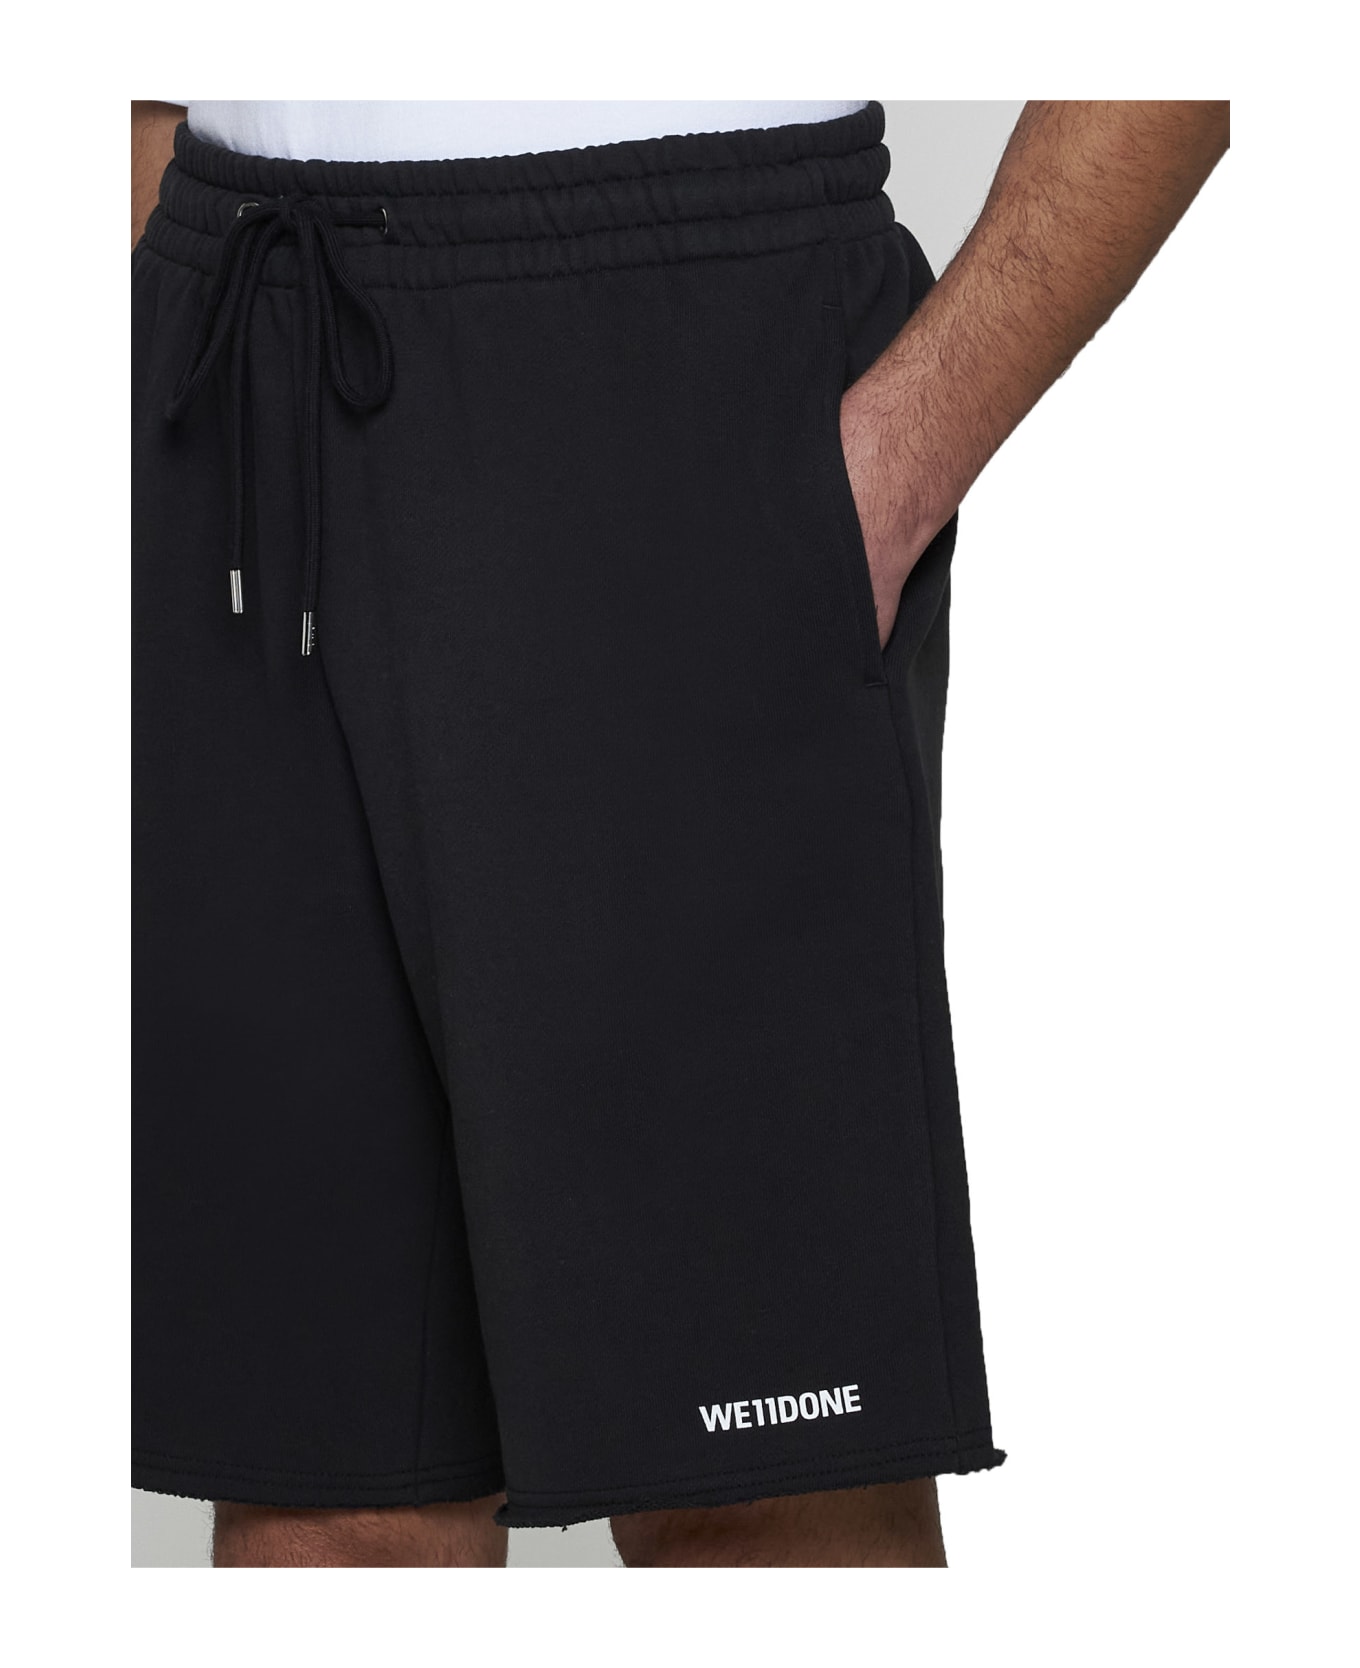 WE11 DONE Shorts - Black ショートパンツ